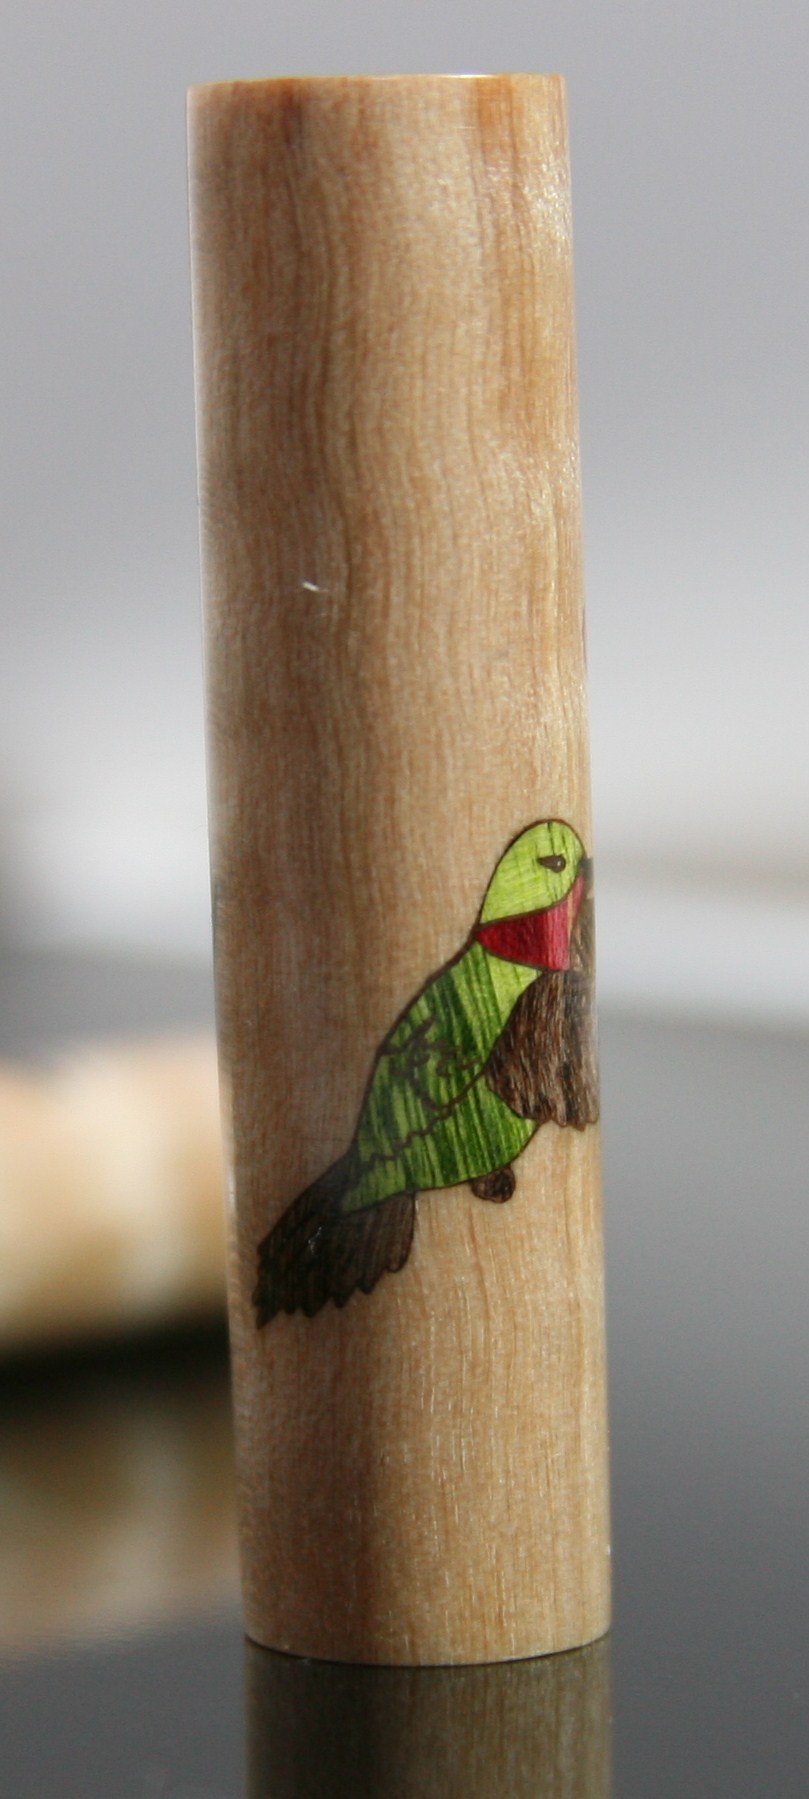 Hummingbird Inlay Kit